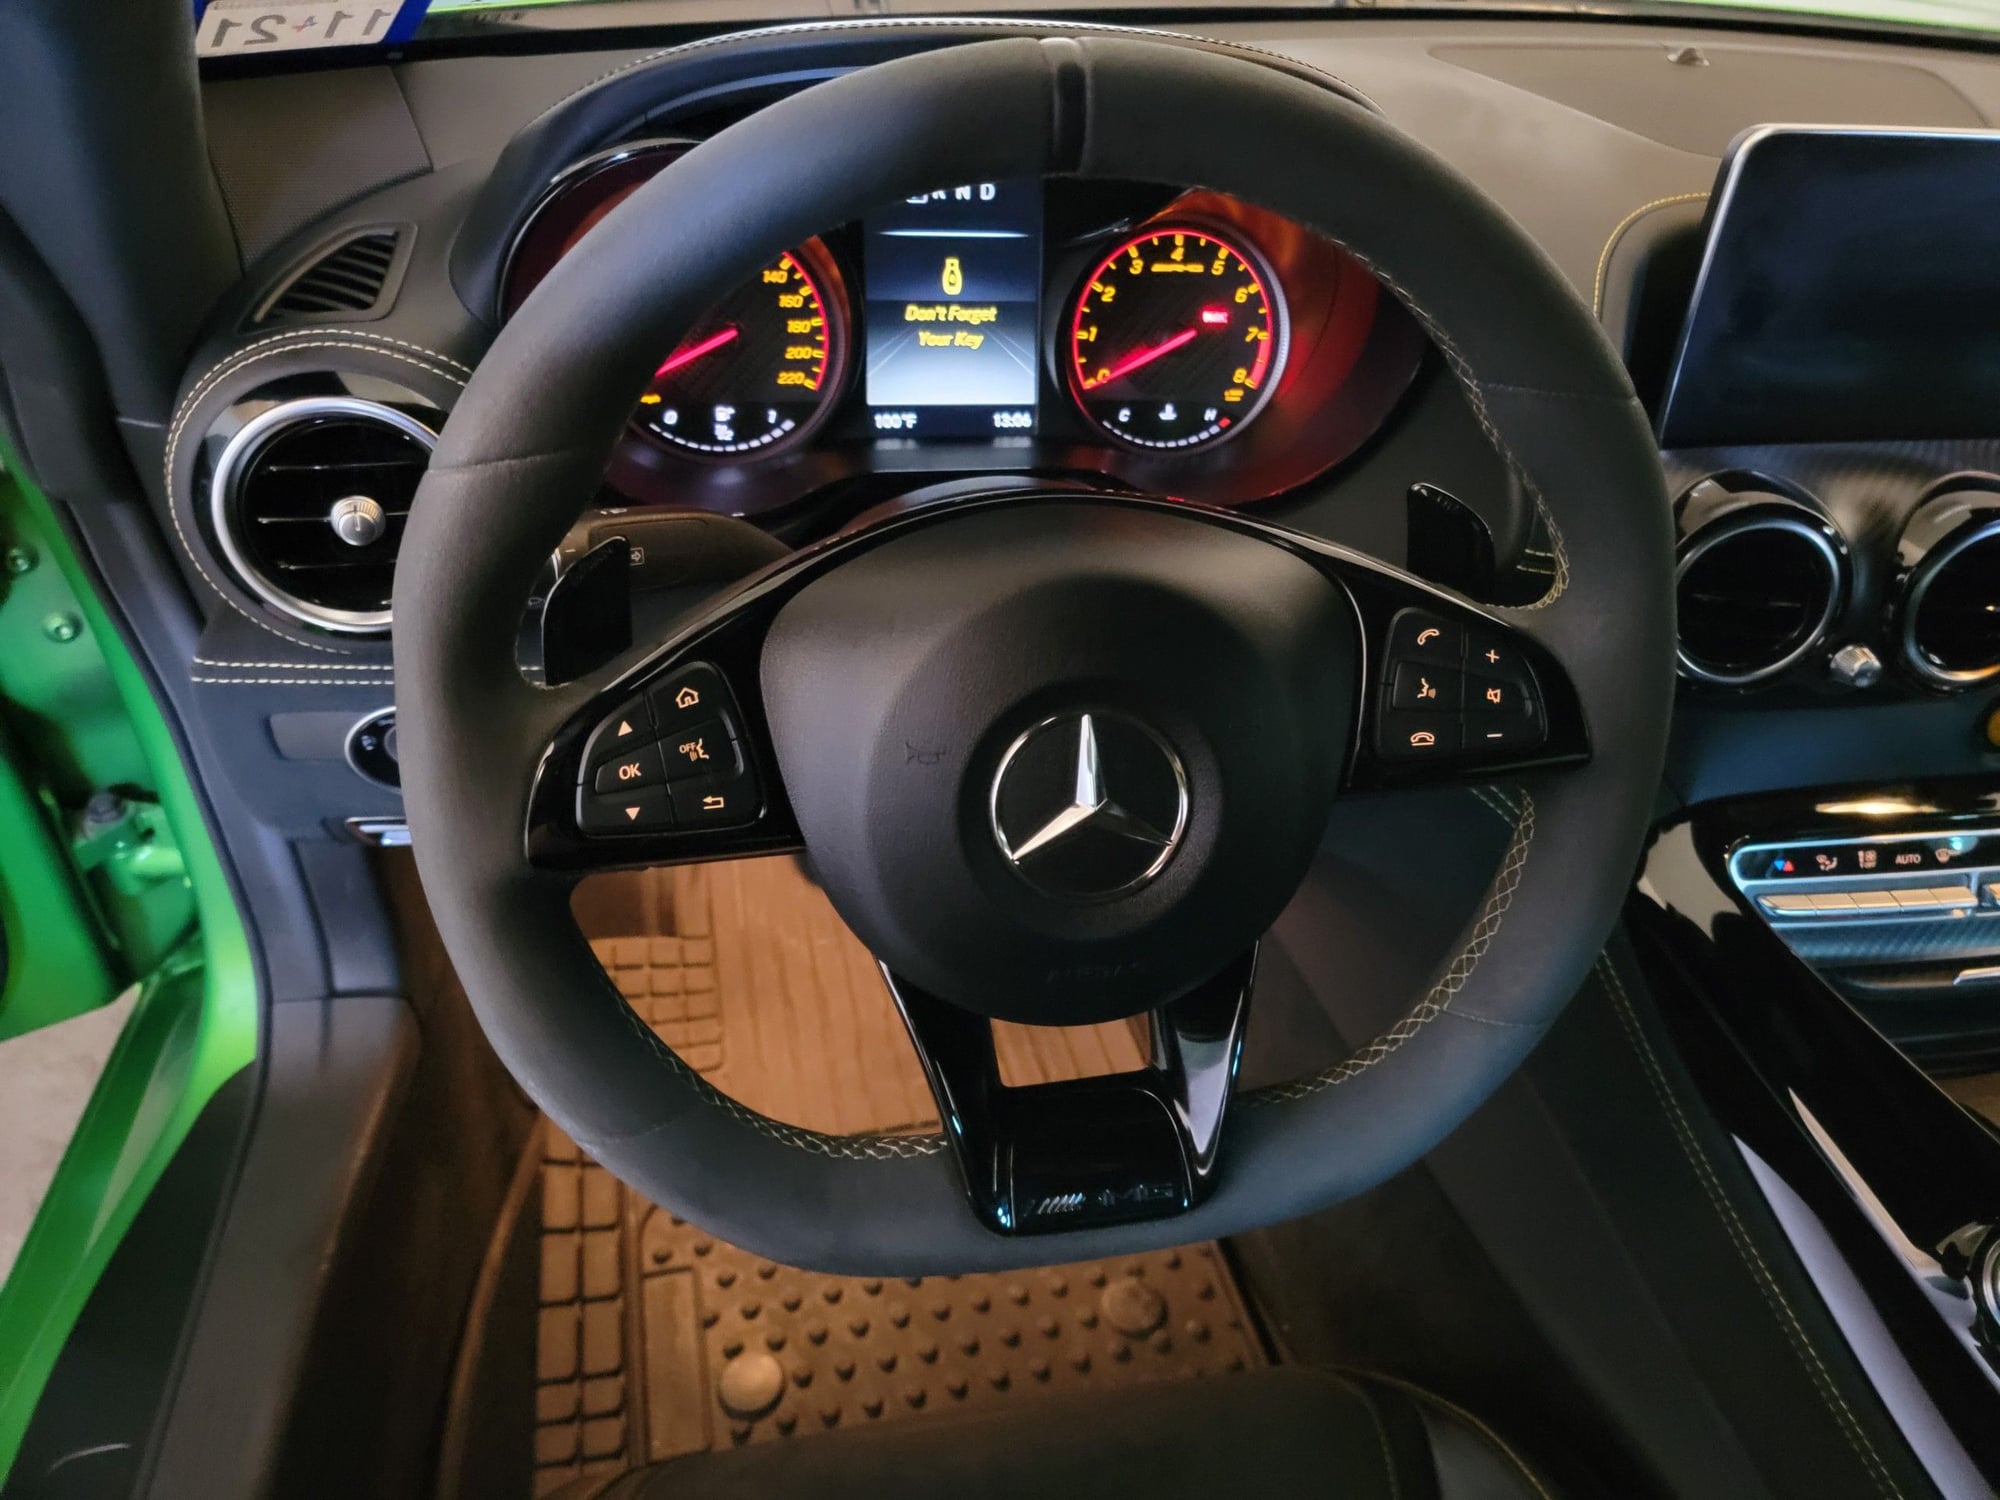 2018 Mercedes-Benz AMG GT R - 2018 AMG GTR; 7K Miles; 155K OBO - Used - VIN WDDYJ7KA6JA017031 - 6,980 Miles - 8 cyl - 2WD - El Paso, TX 79938, United States